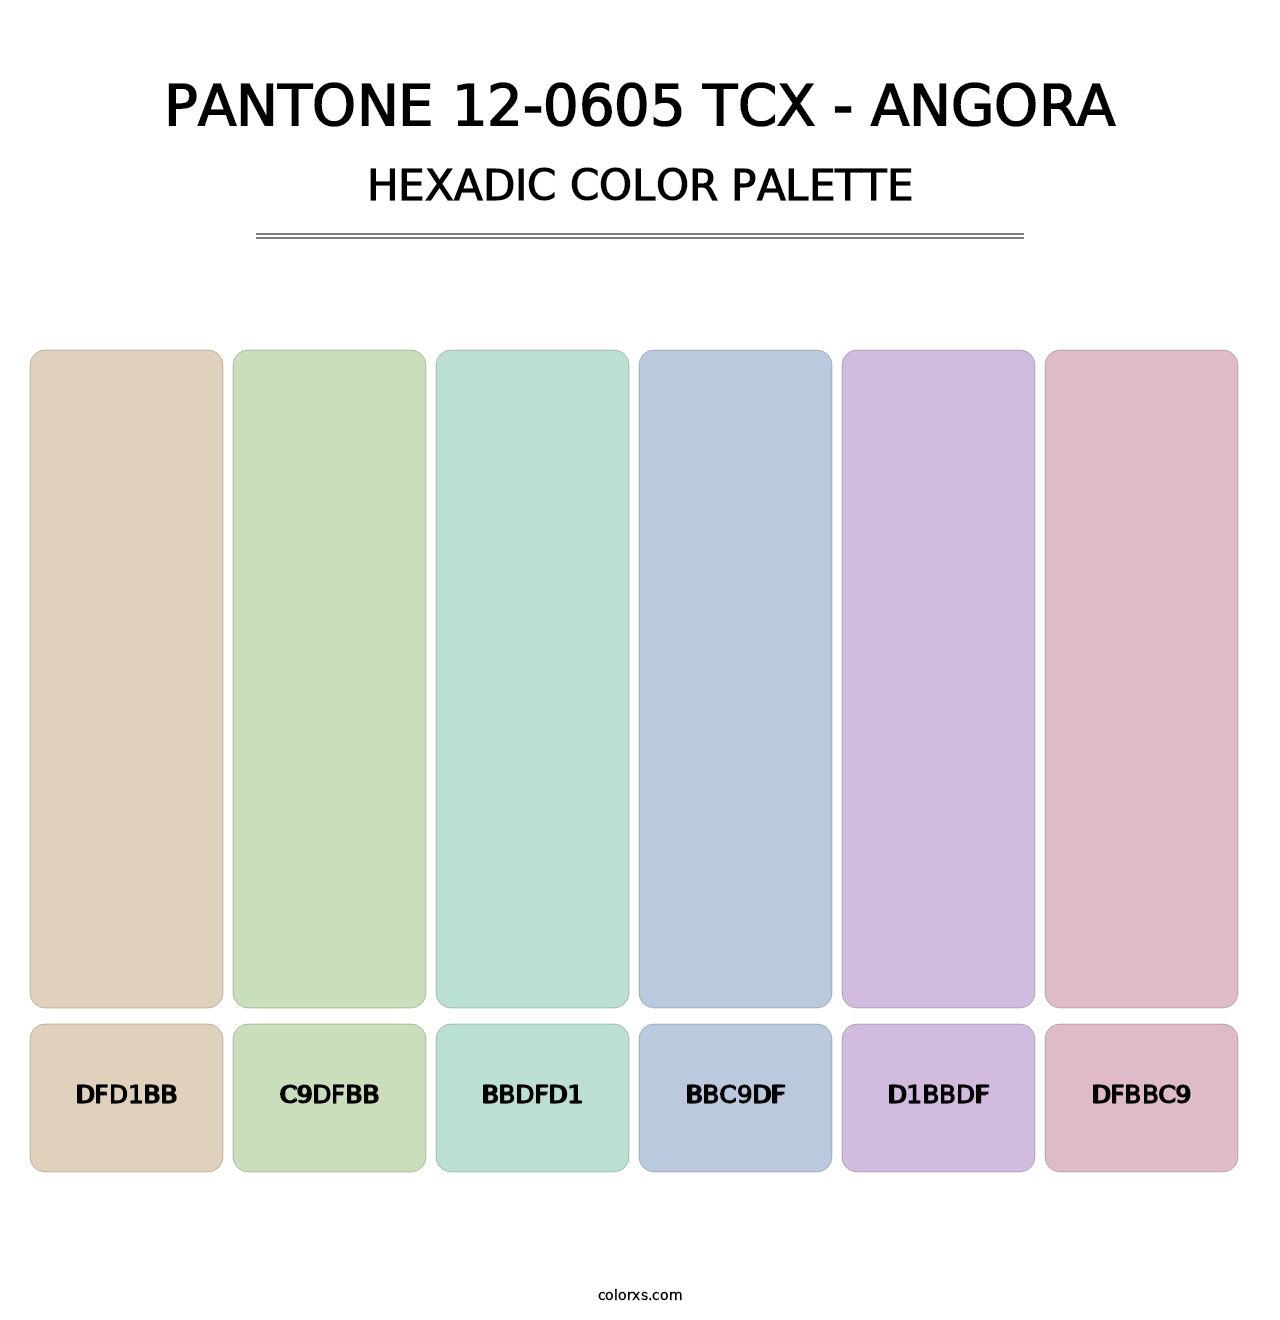 PANTONE 12-0605 TCX - Angora - Hexadic Color Palette